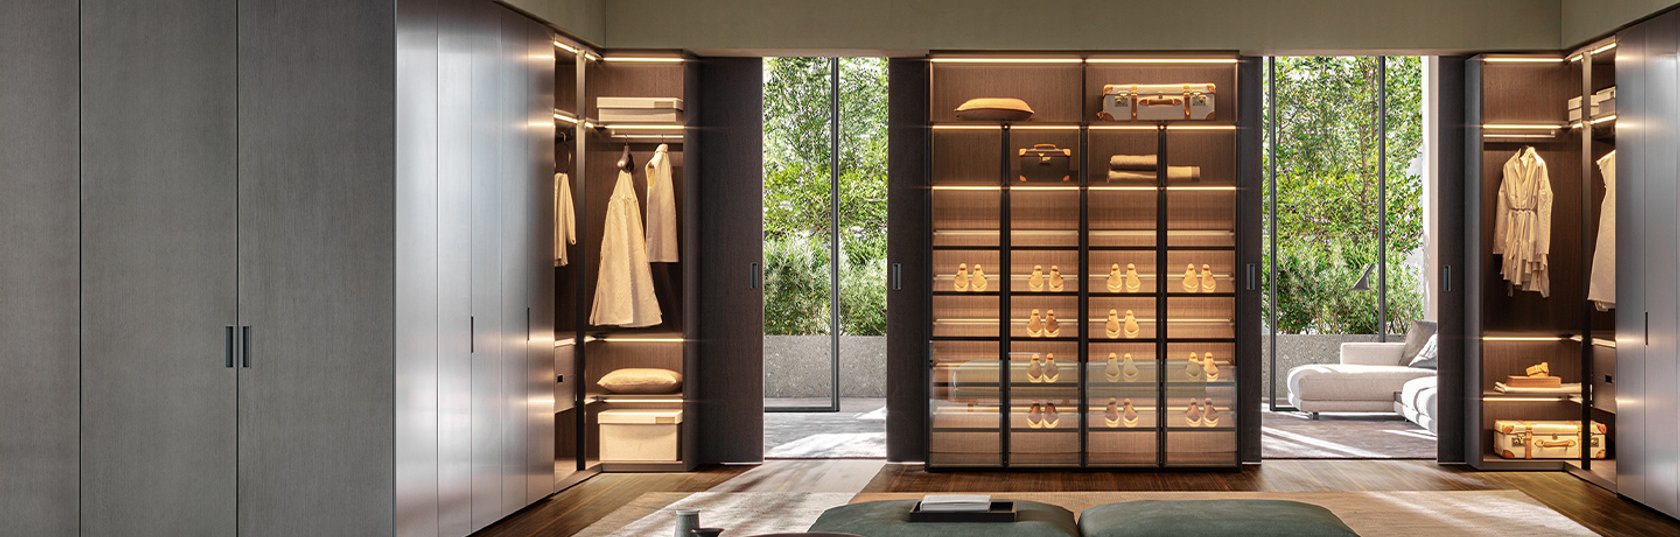 The new showroom showcasing a leading Italian luxury furniture brand